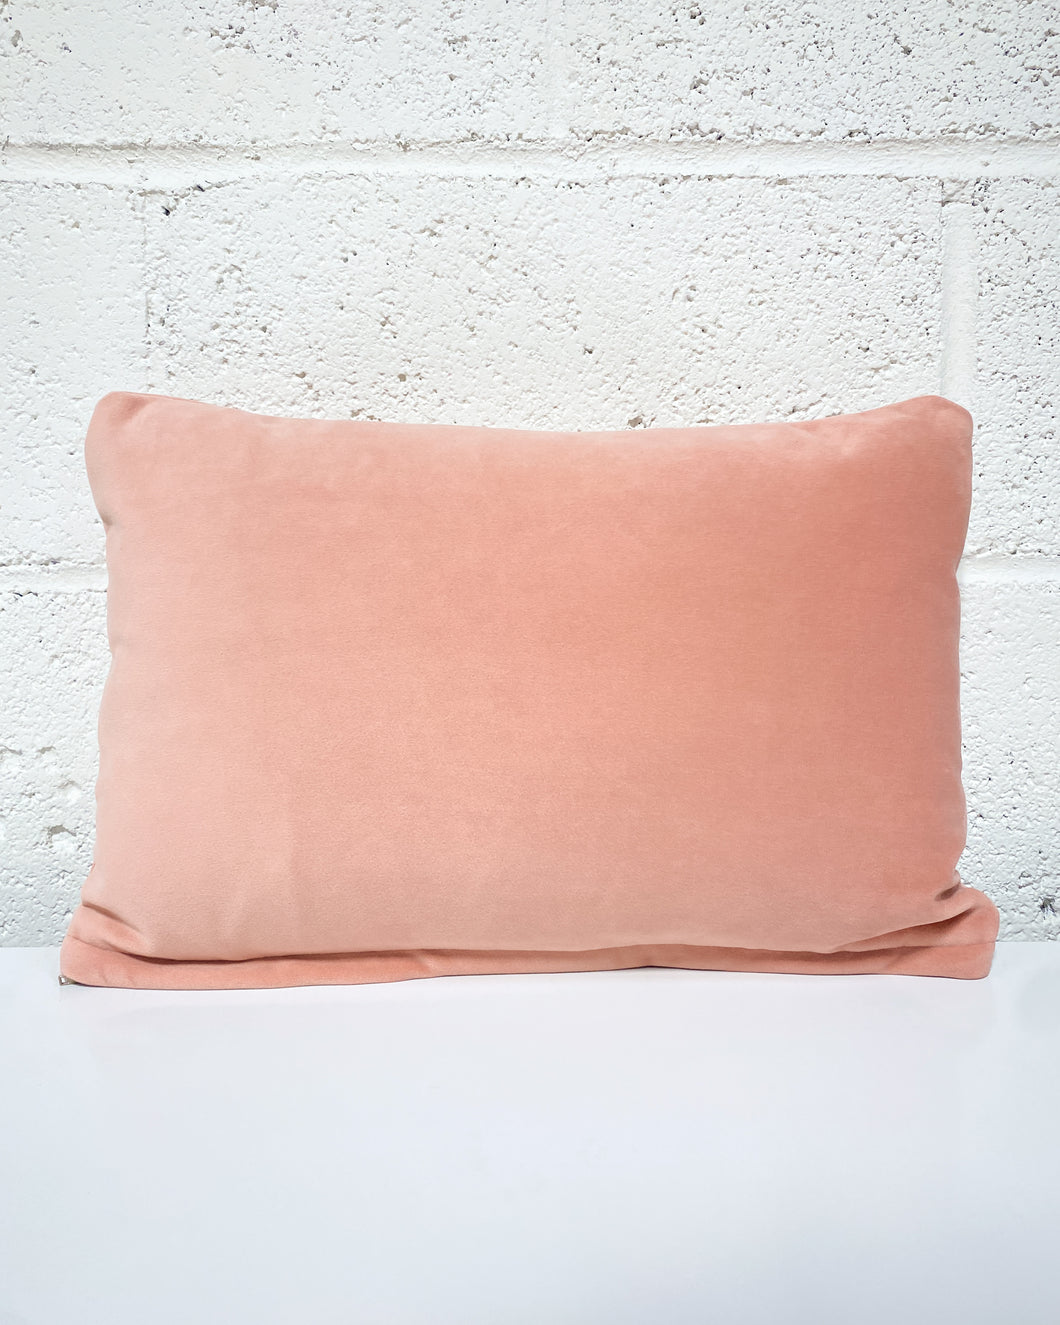 Small Rectangular Pillow in Royale Blush